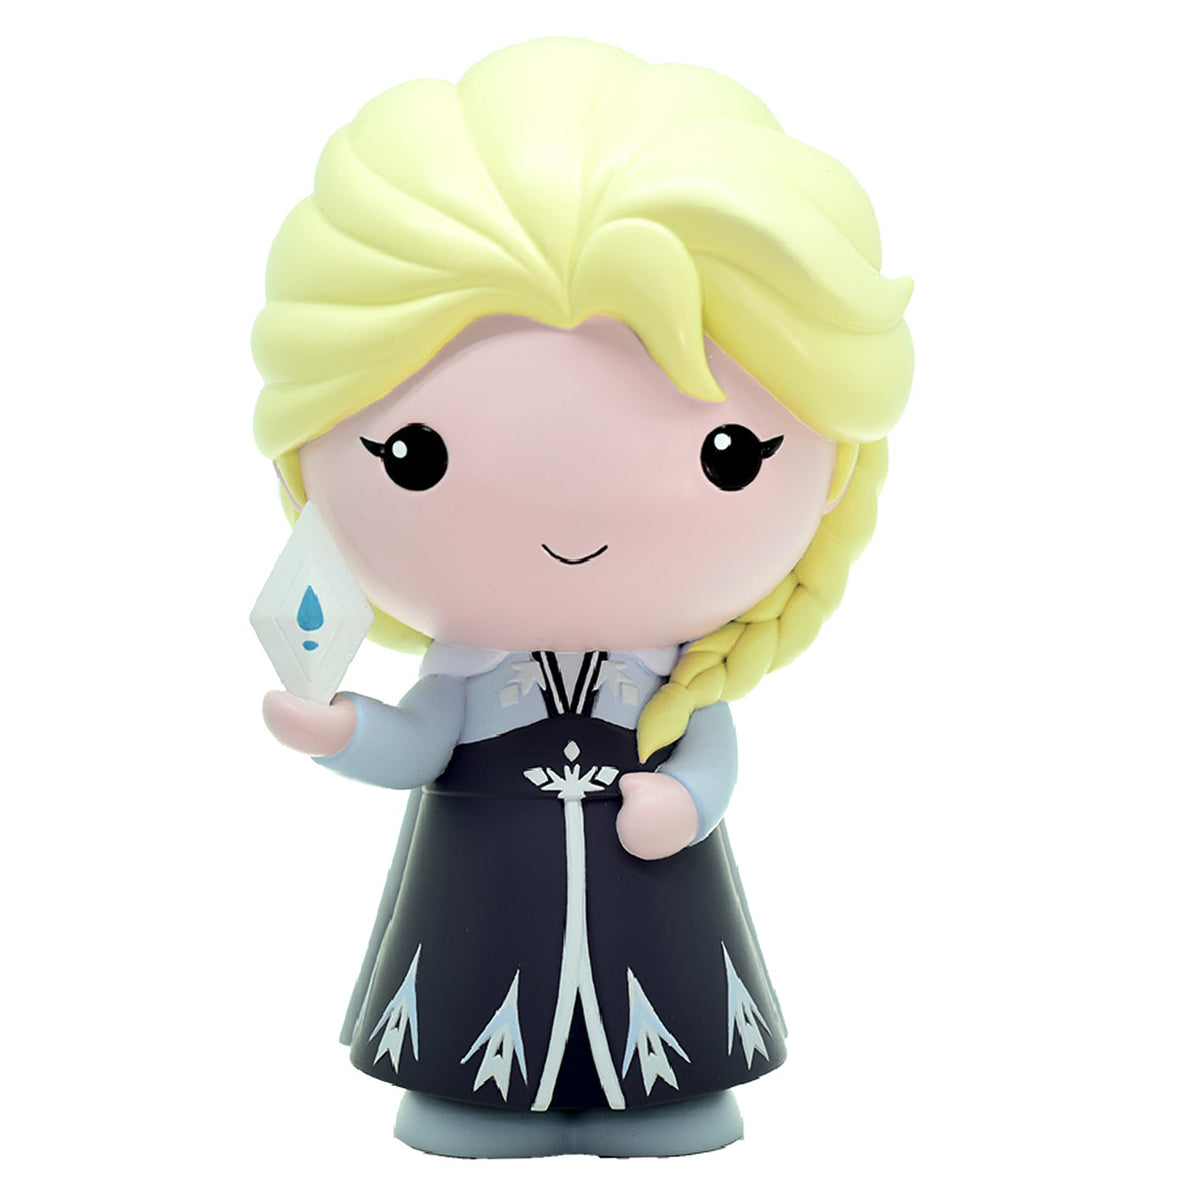 Disney Frozen Elsa Figural Display Bank